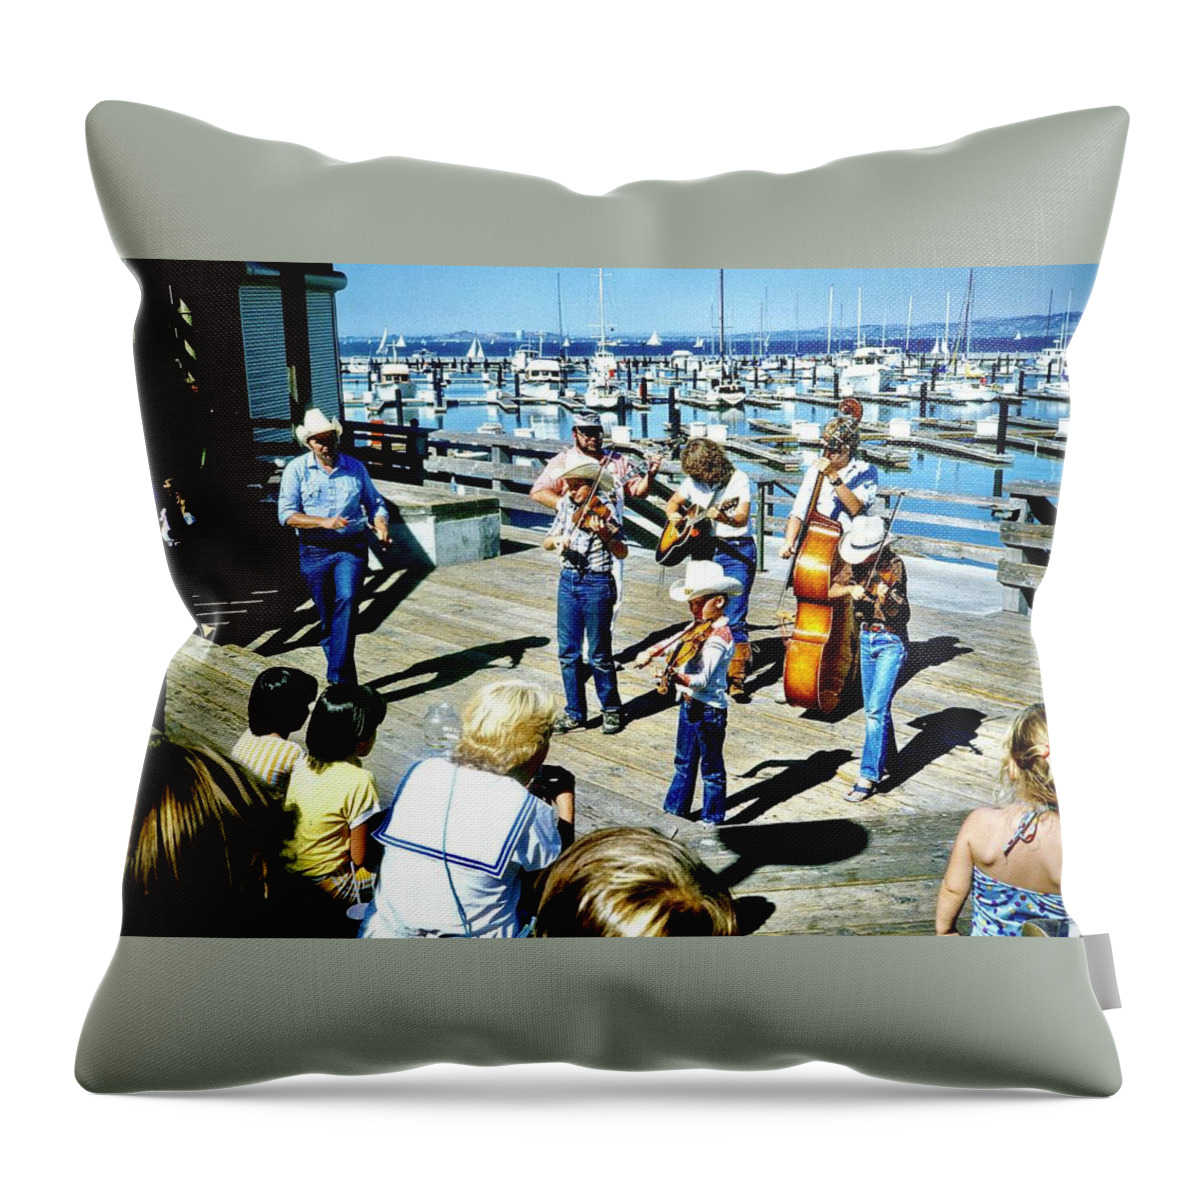  Throw Pillow featuring the photograph San Francisco Pier 39 by Gordon James